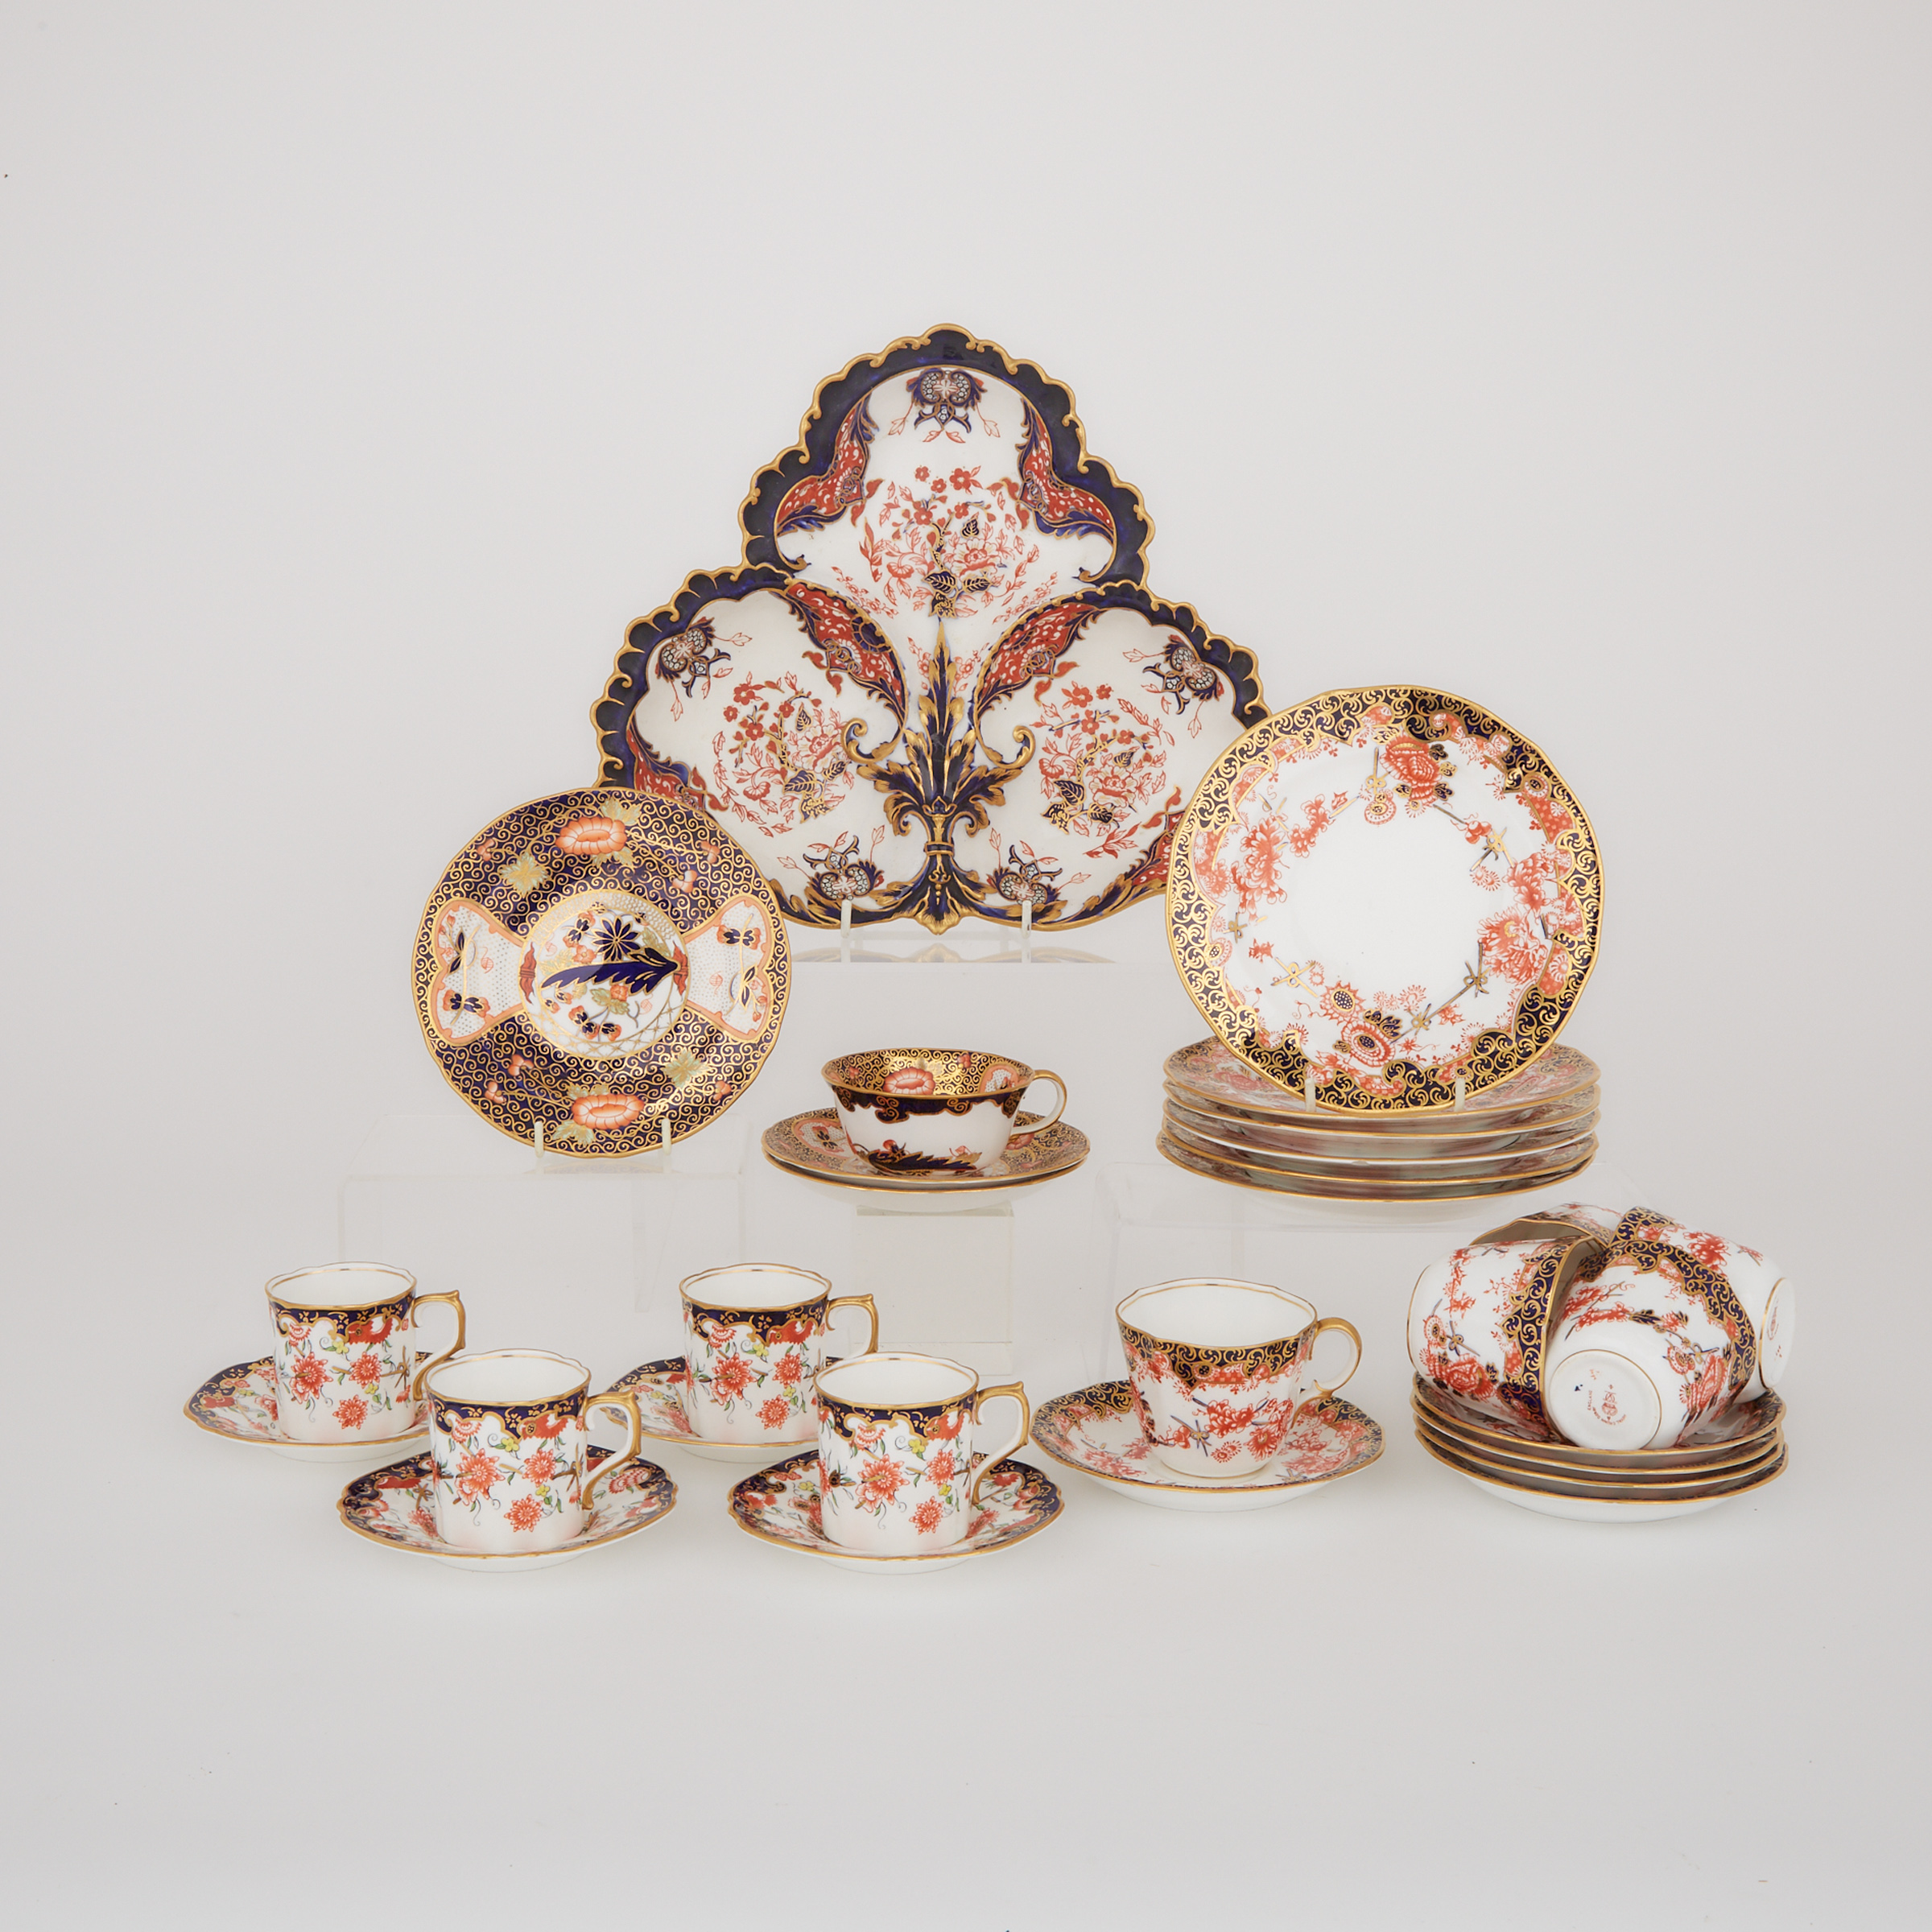 Group of Royal Crown Derby Tablewares, 20th century